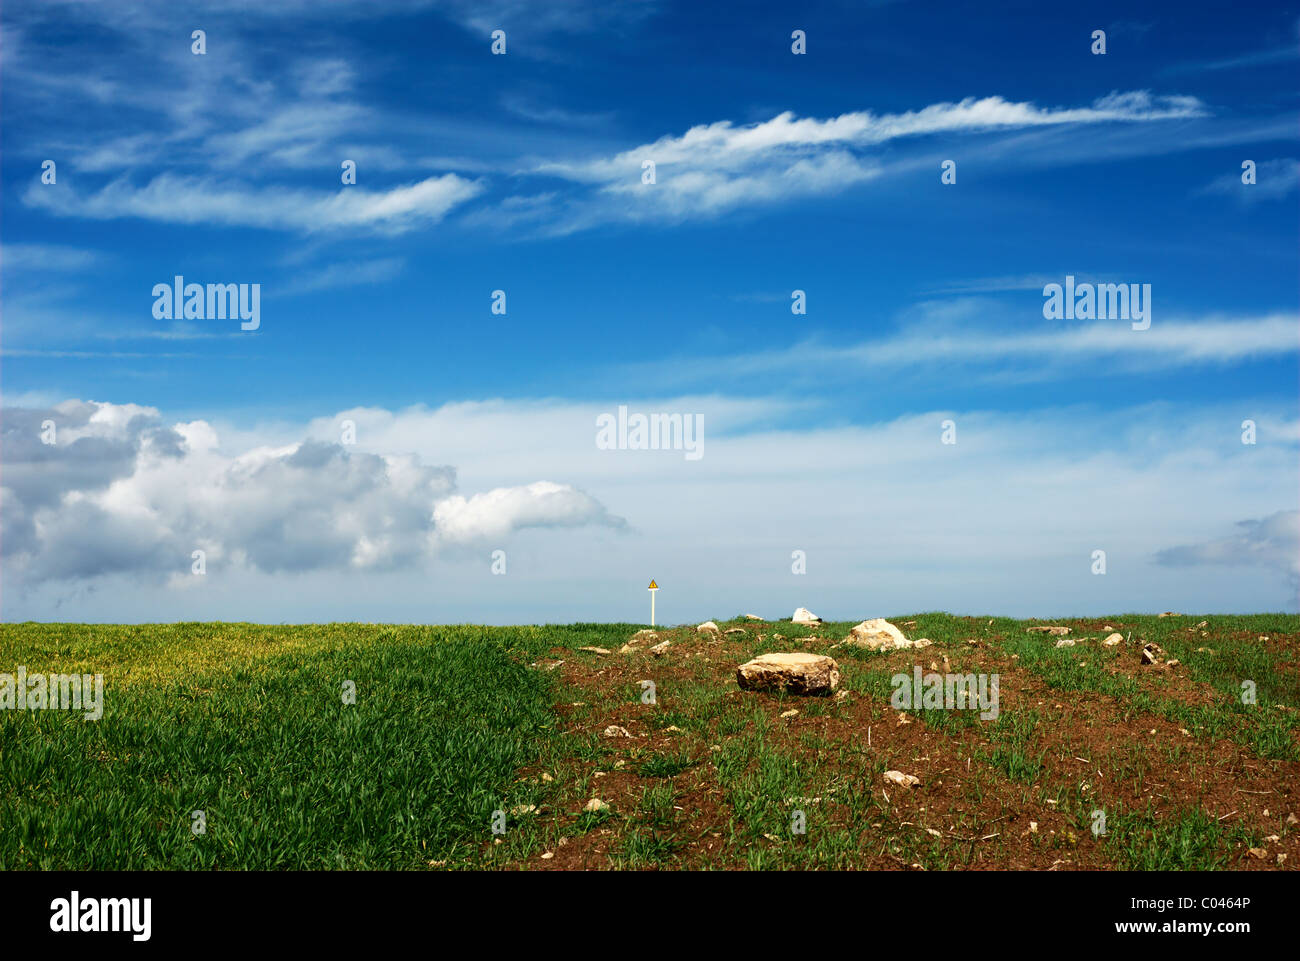 Green wheat field stones and moody sky Stock Photo